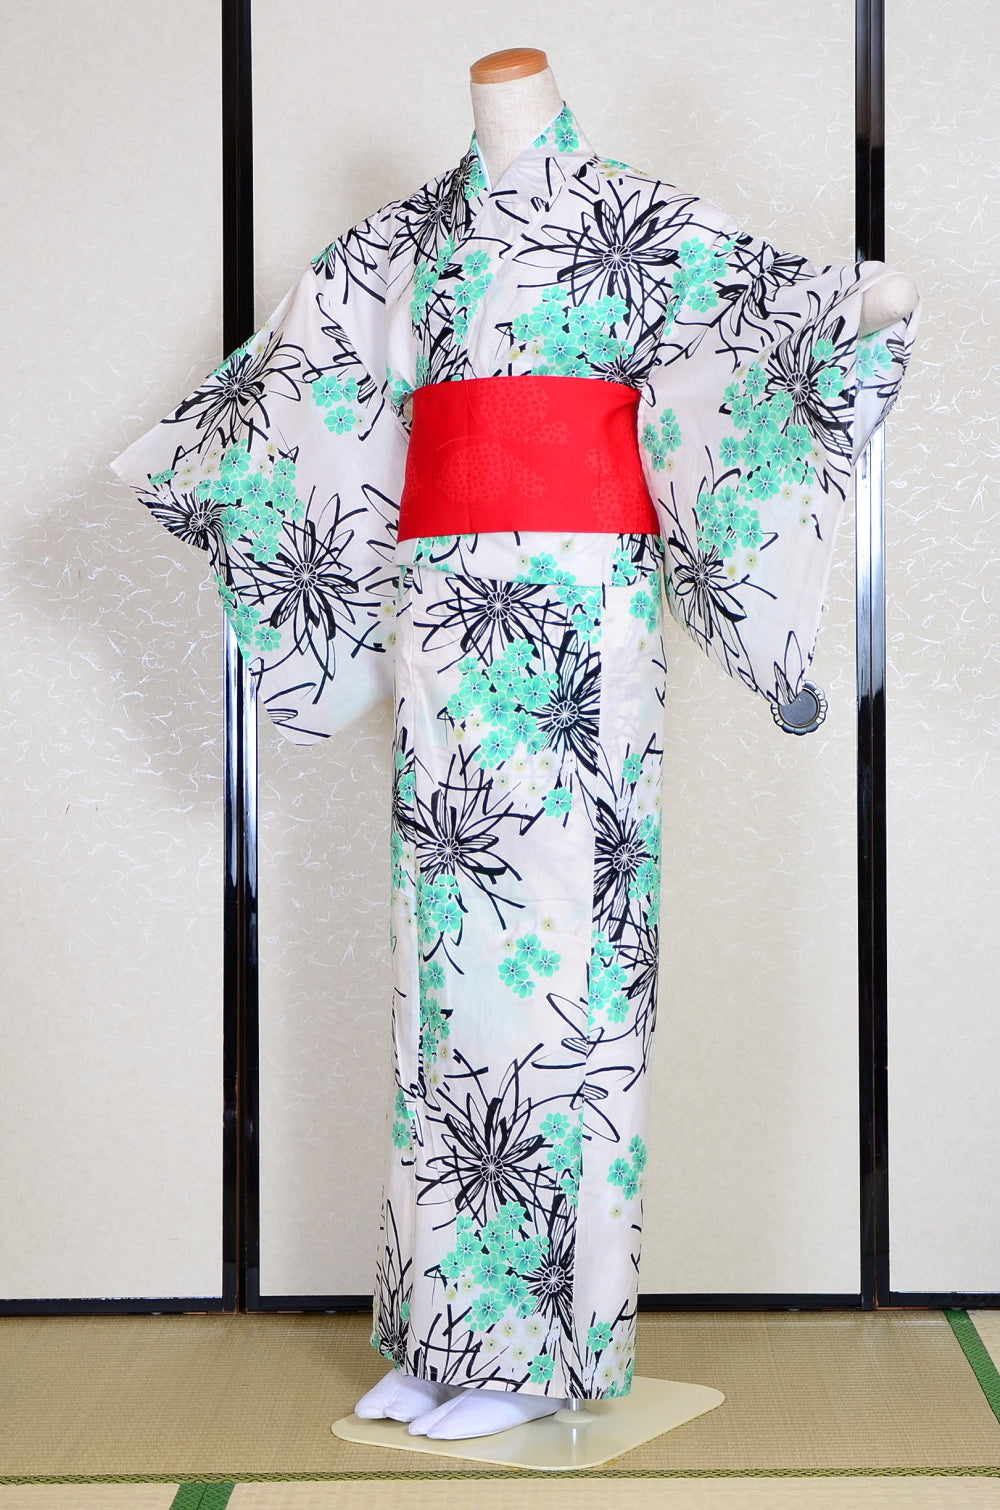 Pin on Kimono (Yukata, Jinbe, etc.)